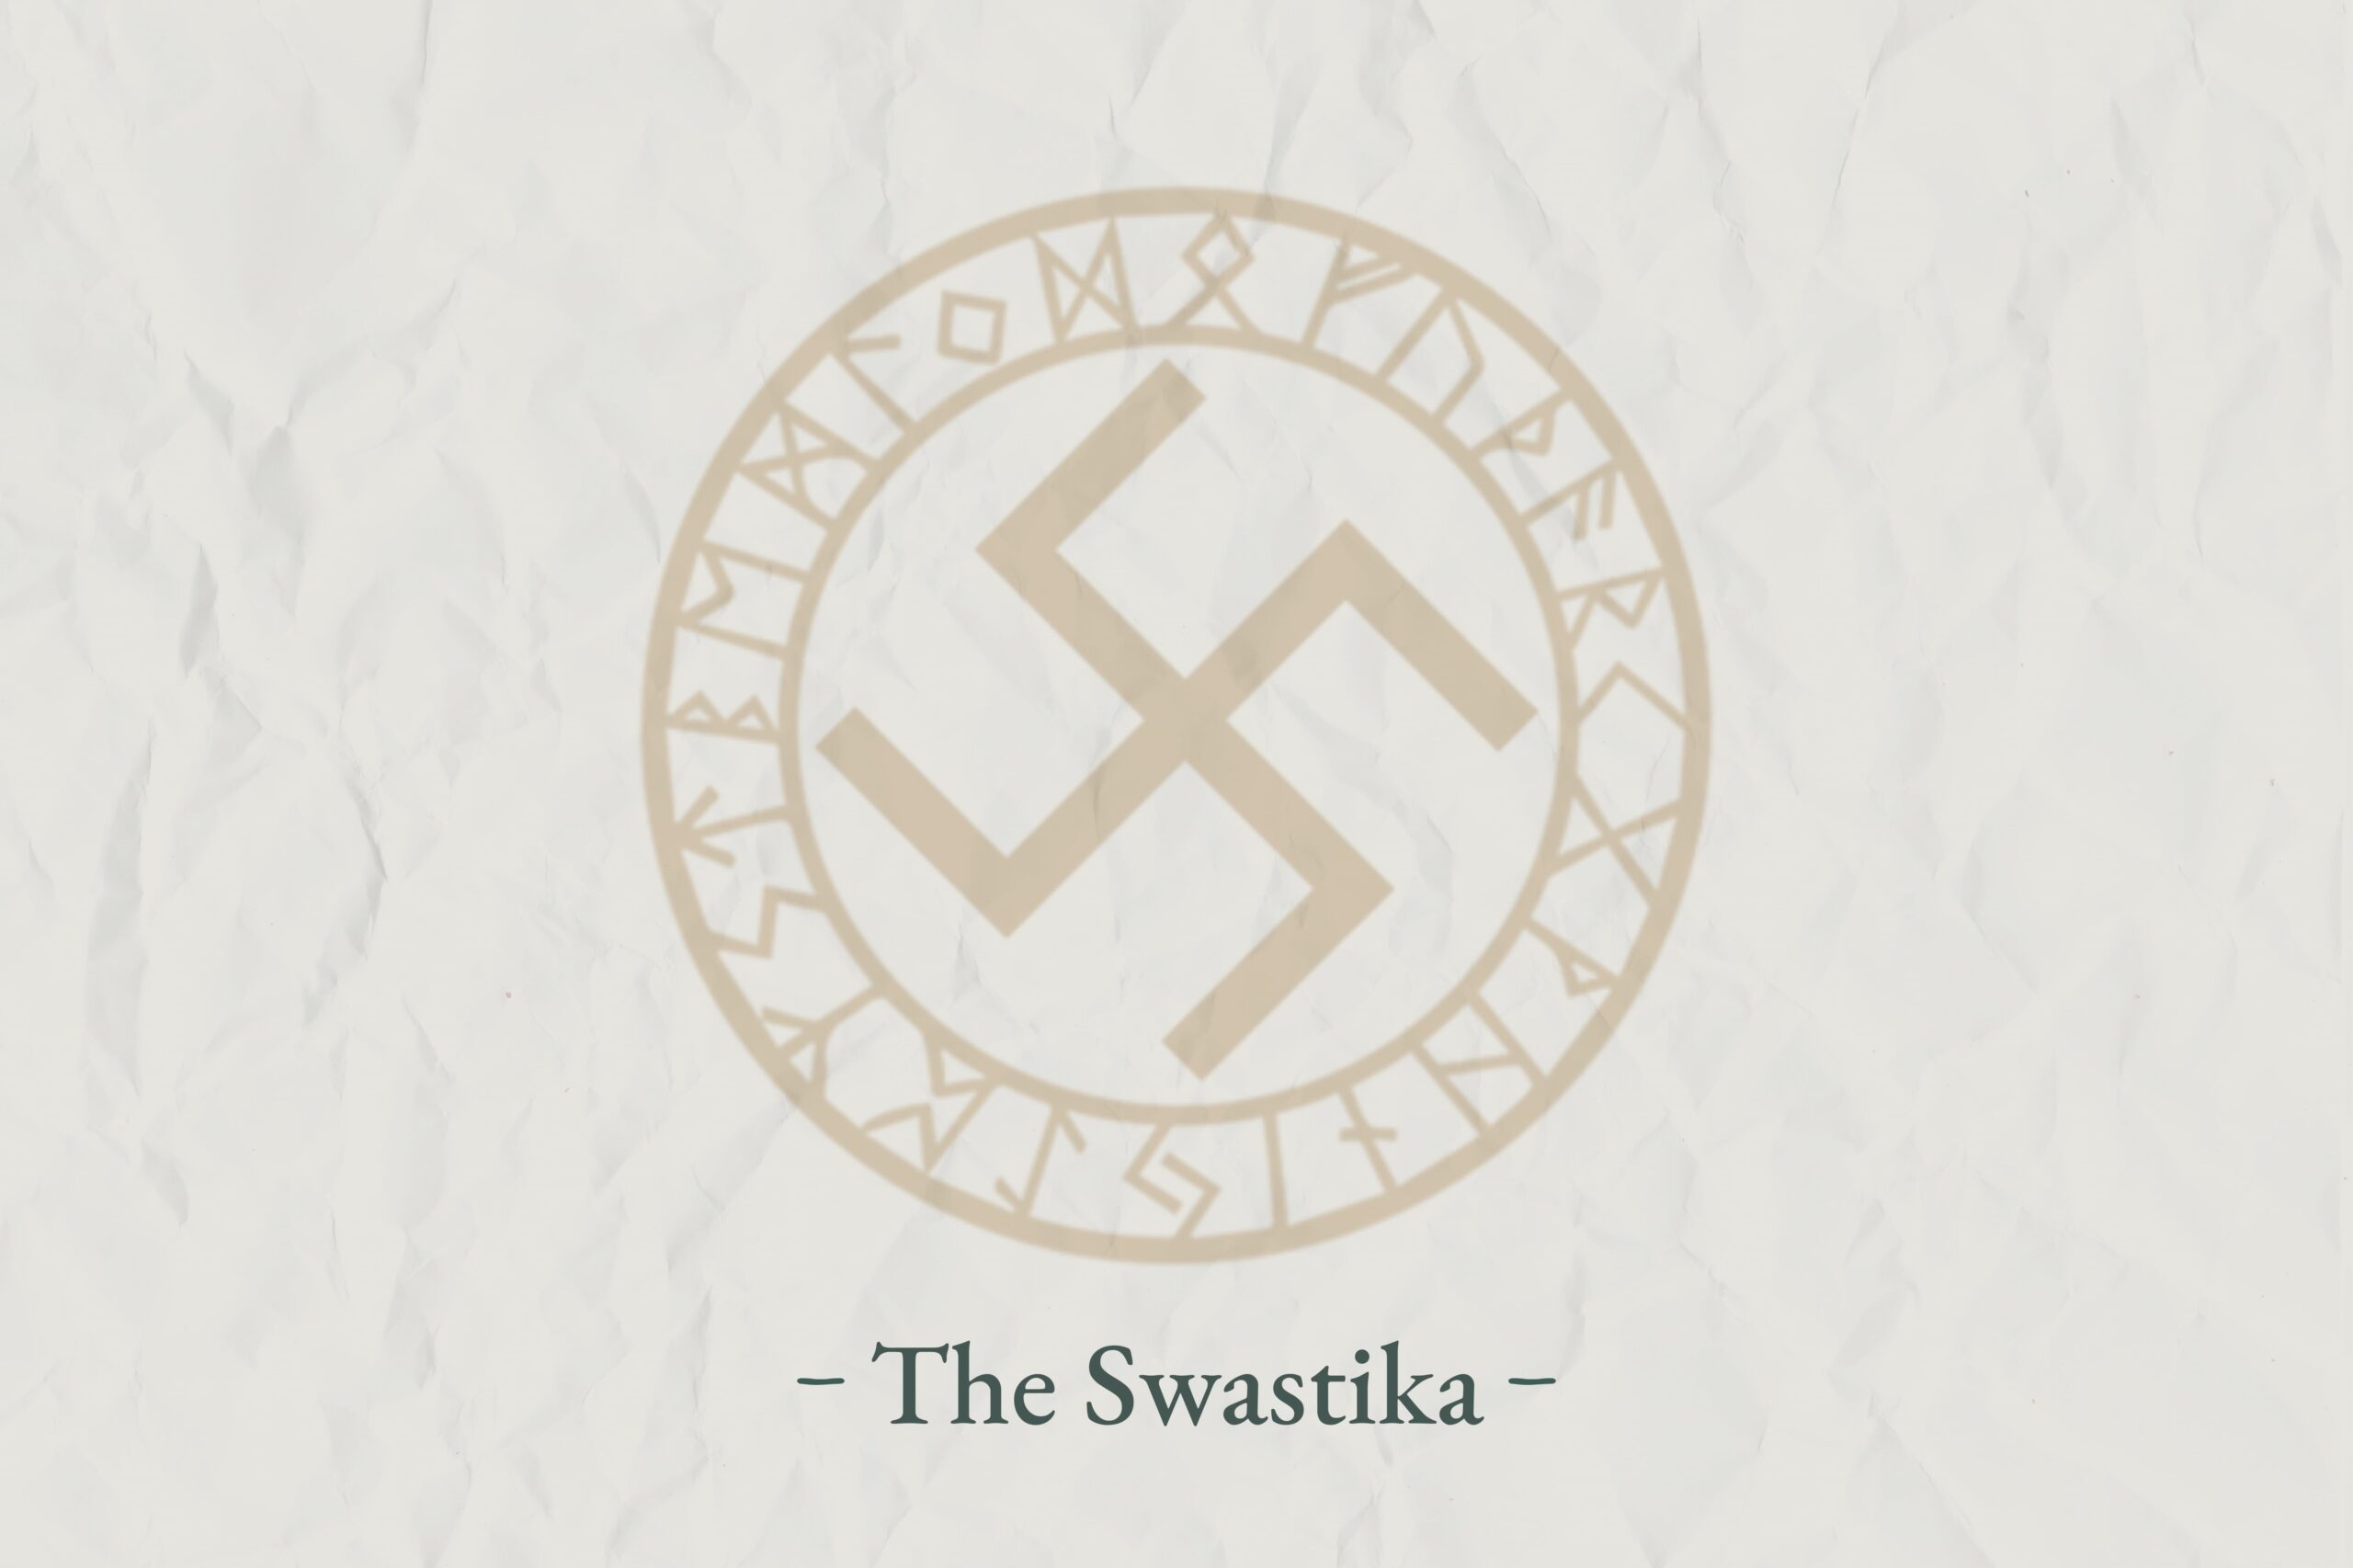 The Viking Swastika